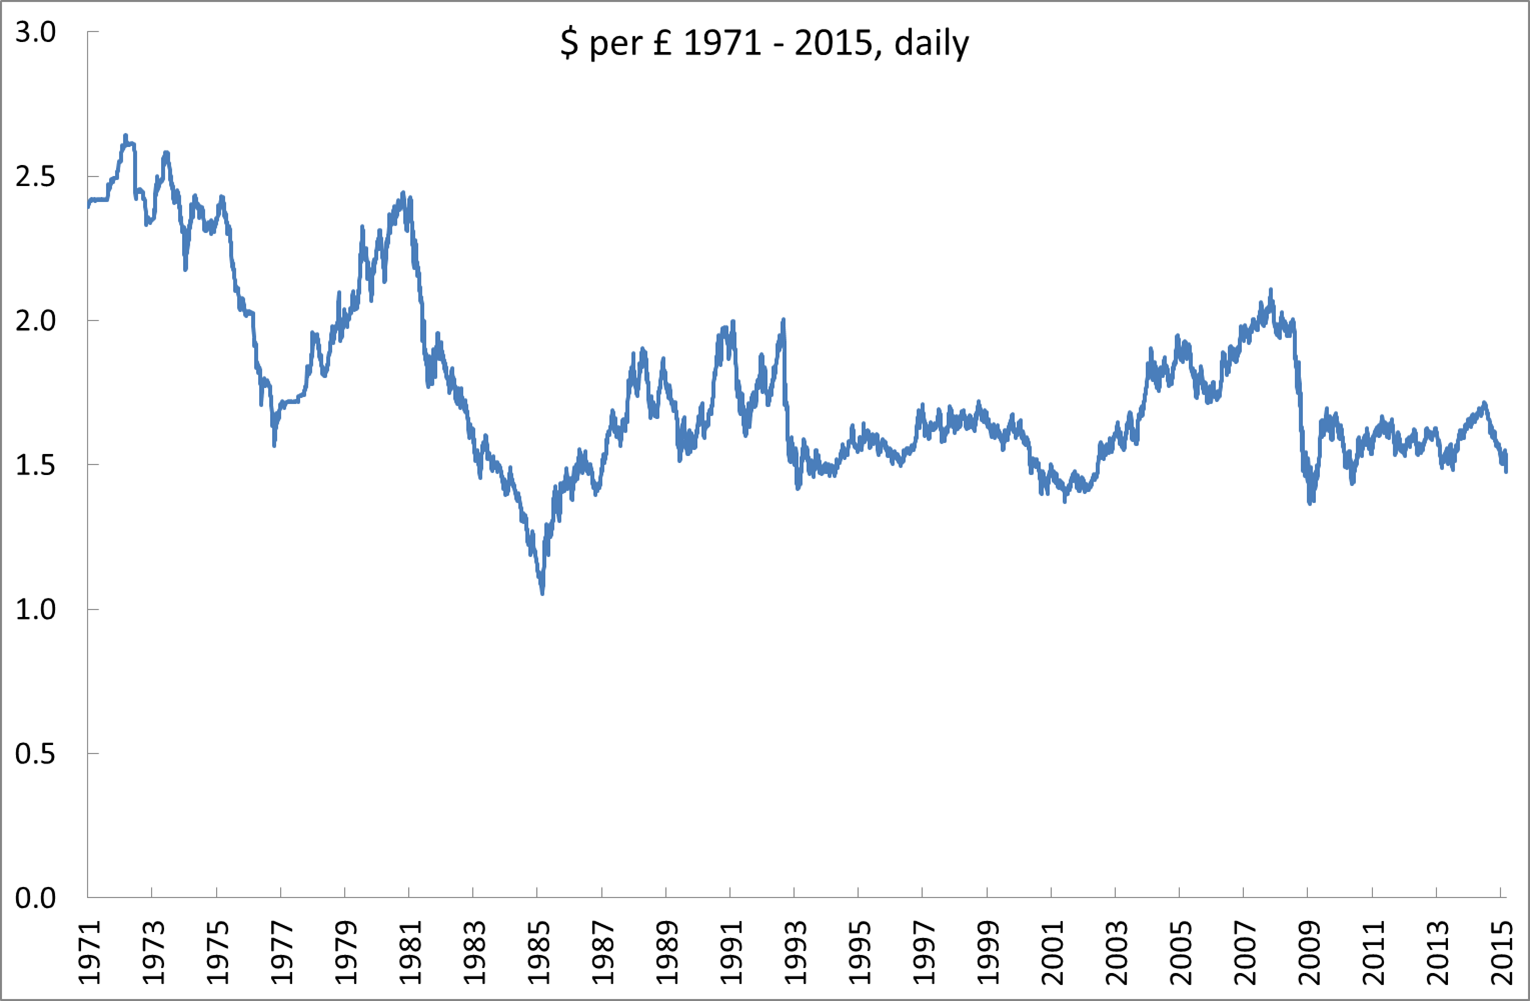 US dollar pound exchange rate 2015 | Simon Taylor's Blog